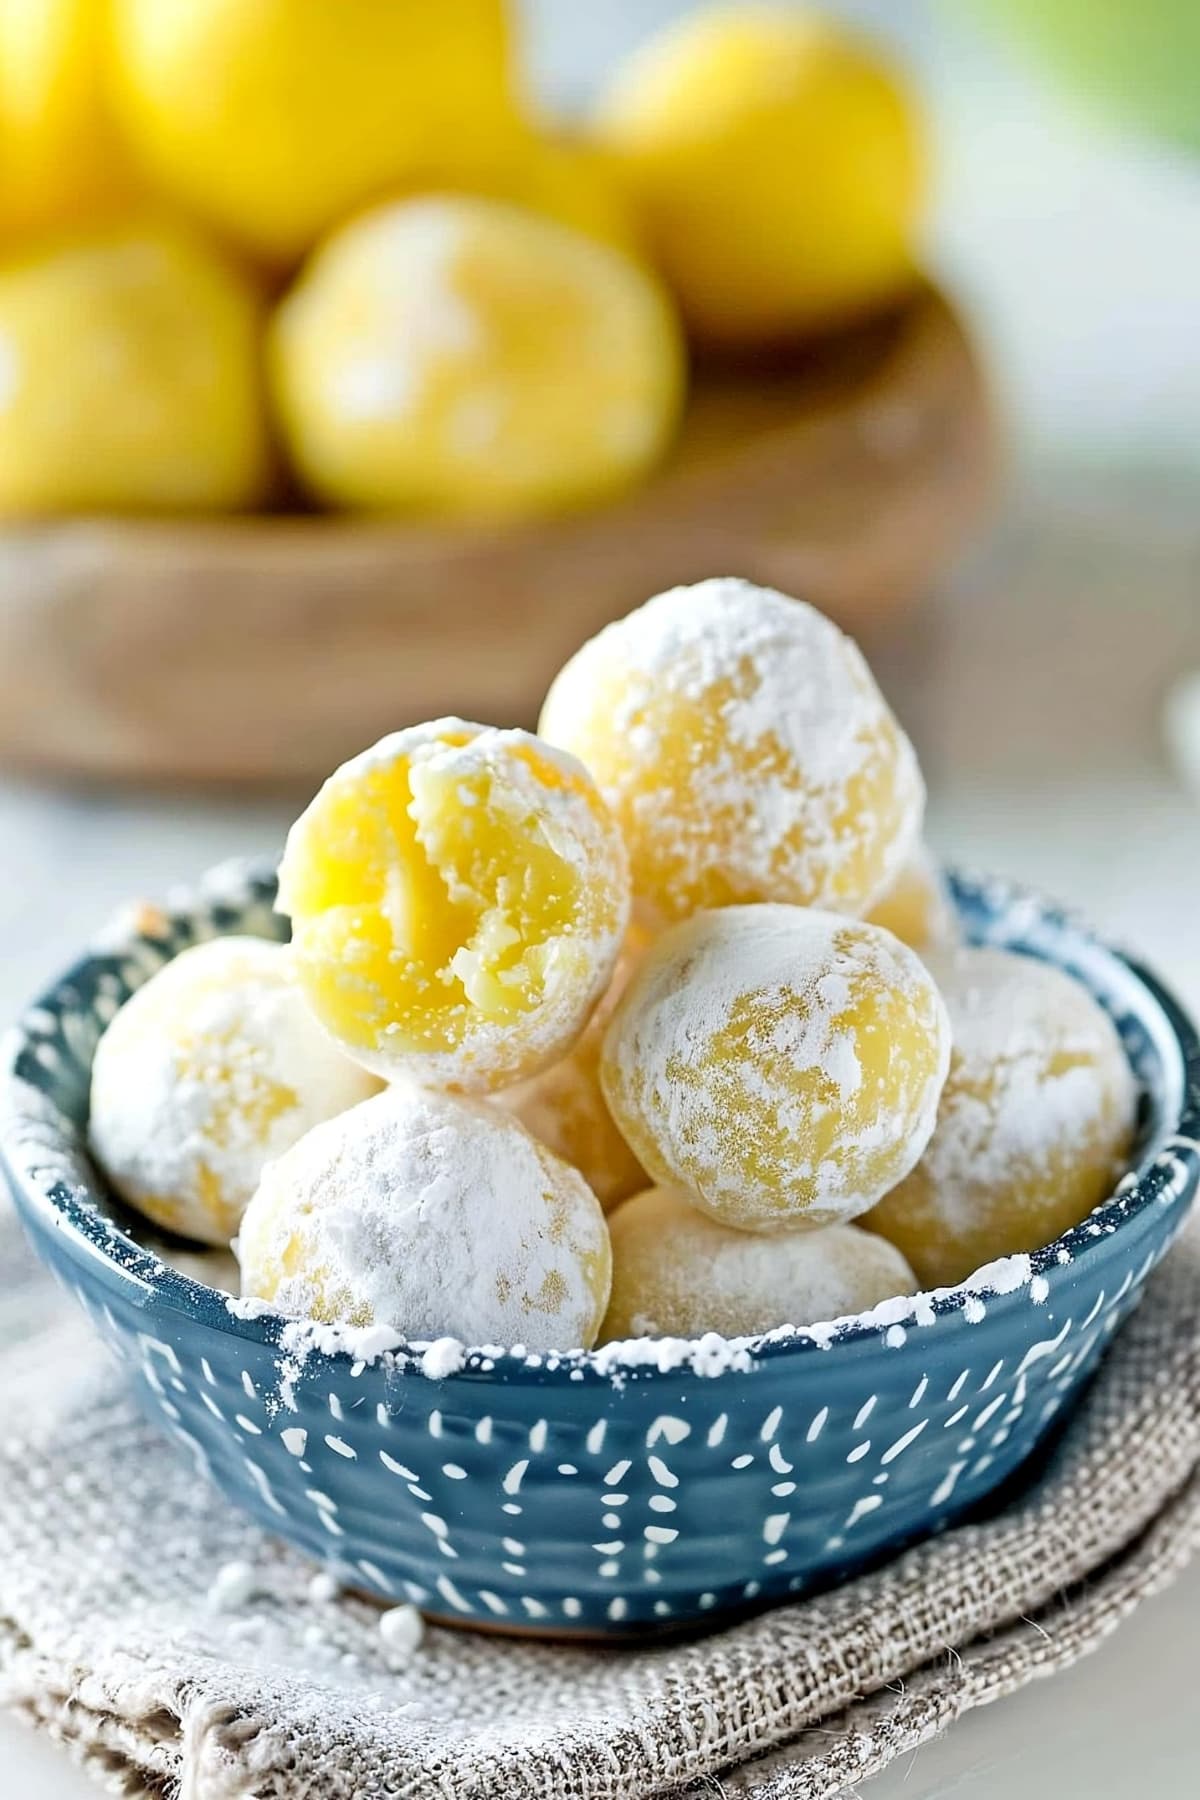 Sweet and lemon white chocolate lemon truffles in a bowl